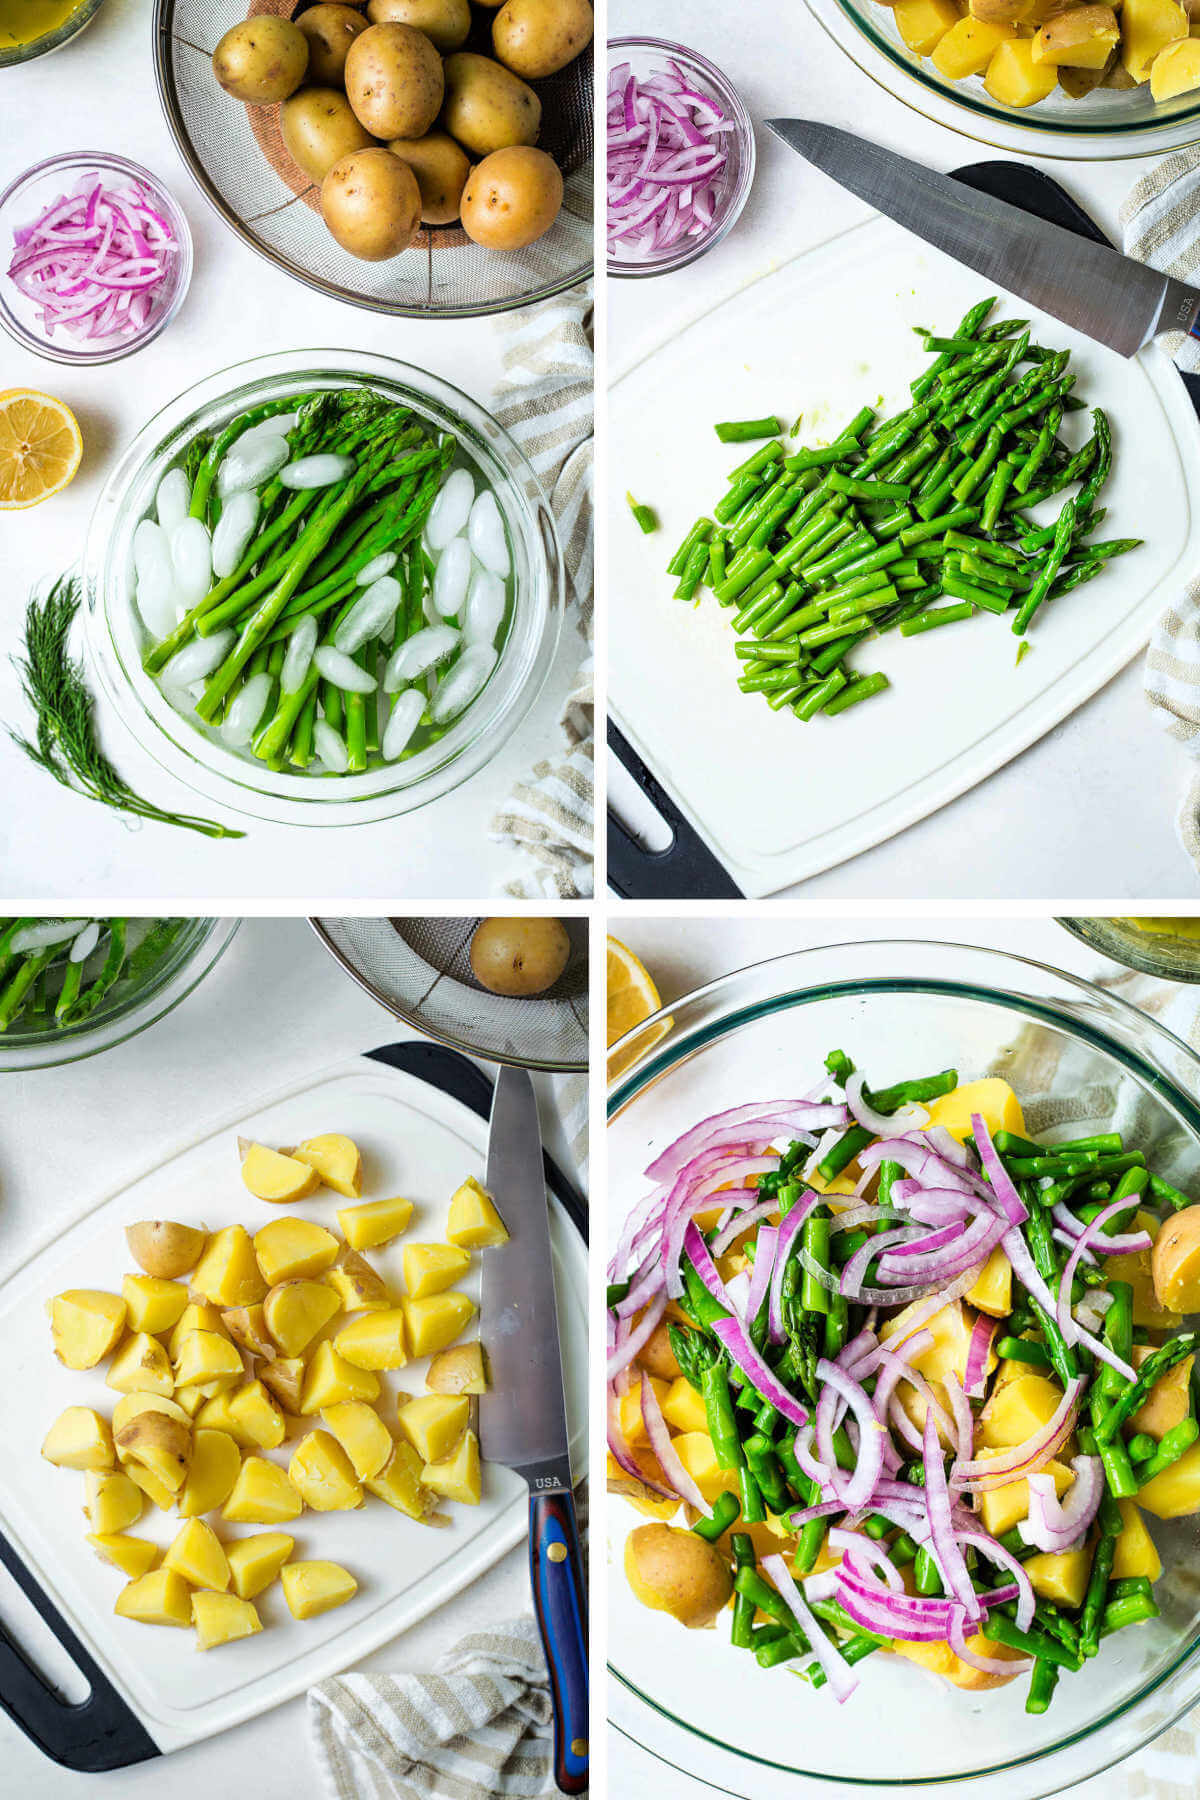 asparagus in an ice bath; asparagus on a cutting board; potatoes quartered on a cutting board; chopped veggies in a bowl for lemon dill potato salad.